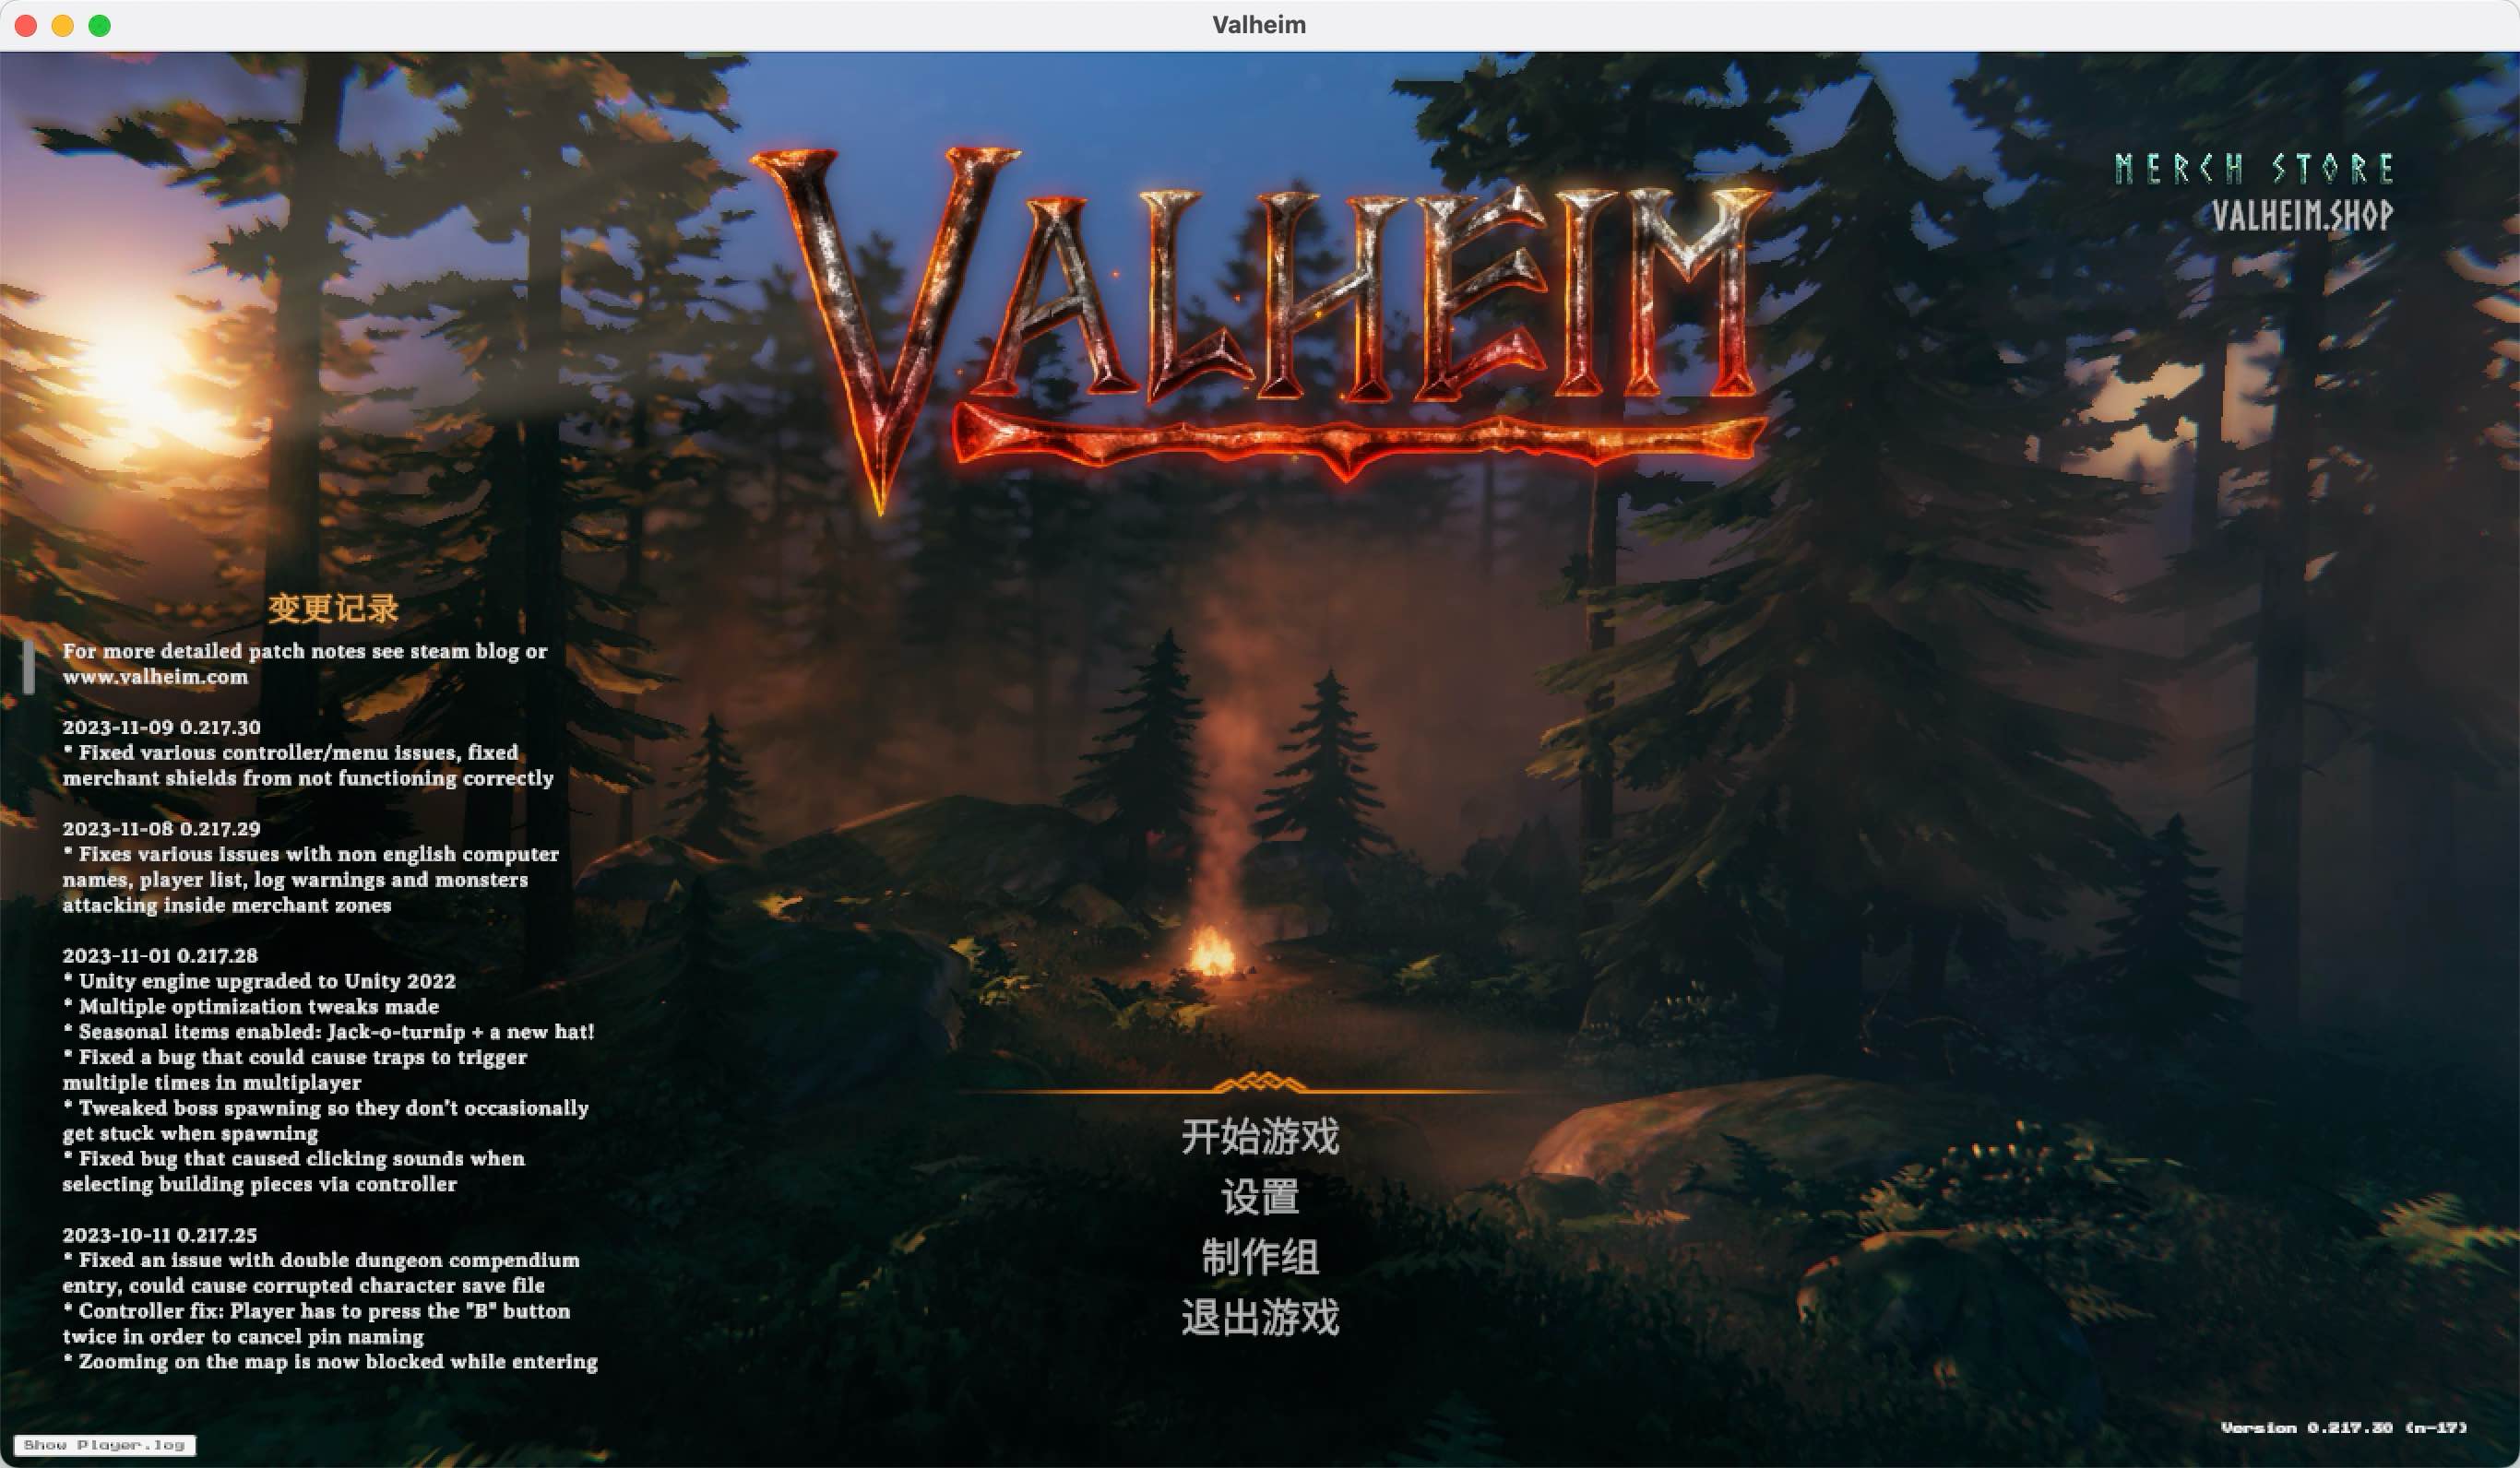 Valheim: 英灵神殿 for Mac v0.217.30 中文移植版 苹果电脑